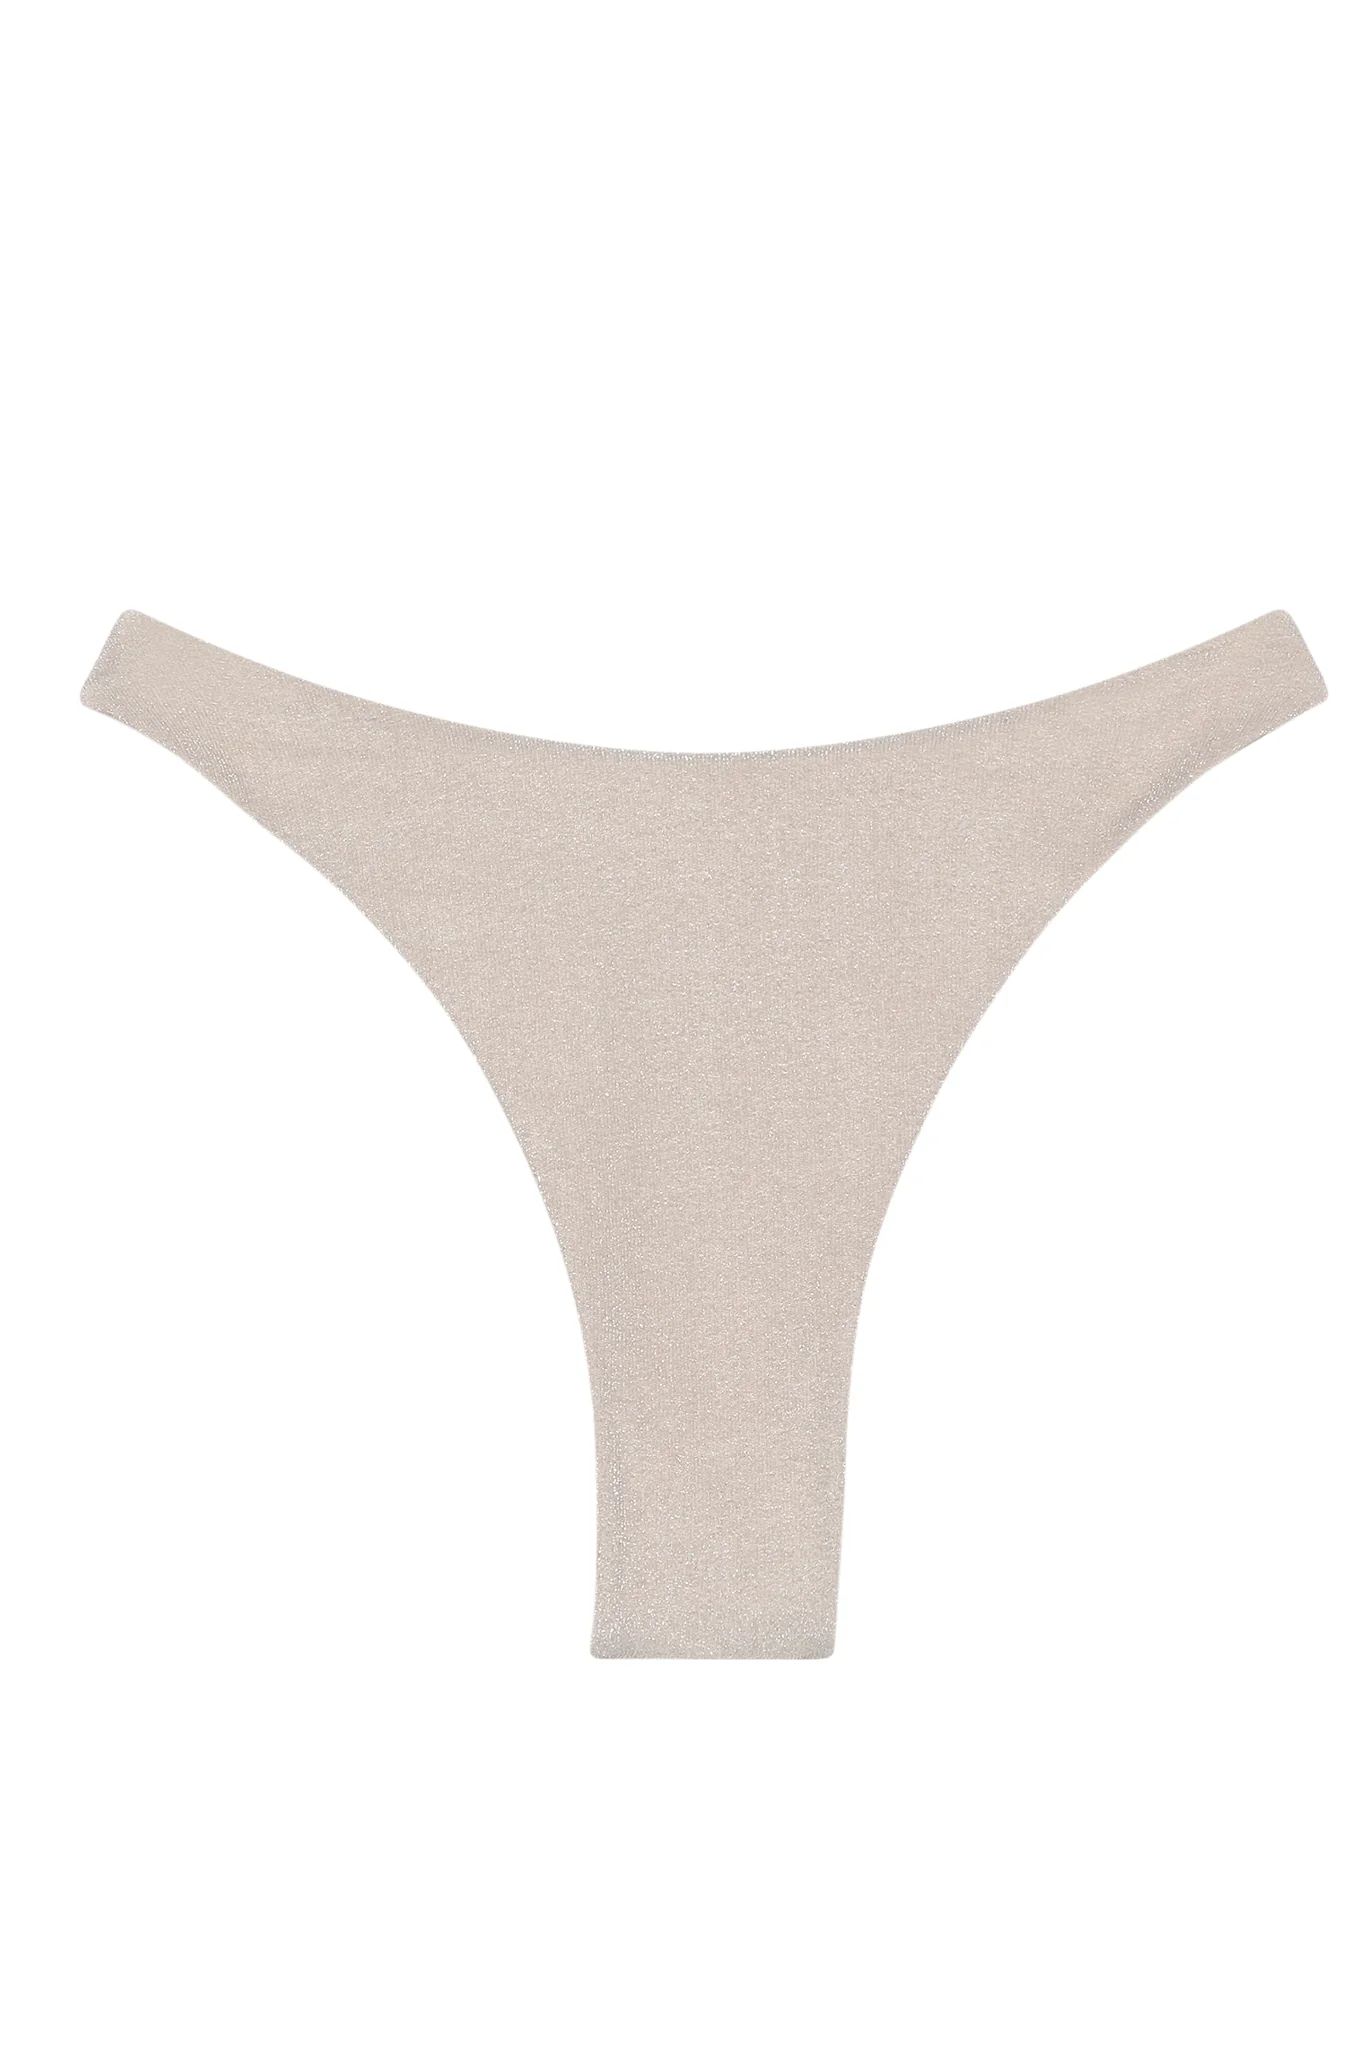 Byron Bottom - Pearl Shimmer | Monday Swimwear